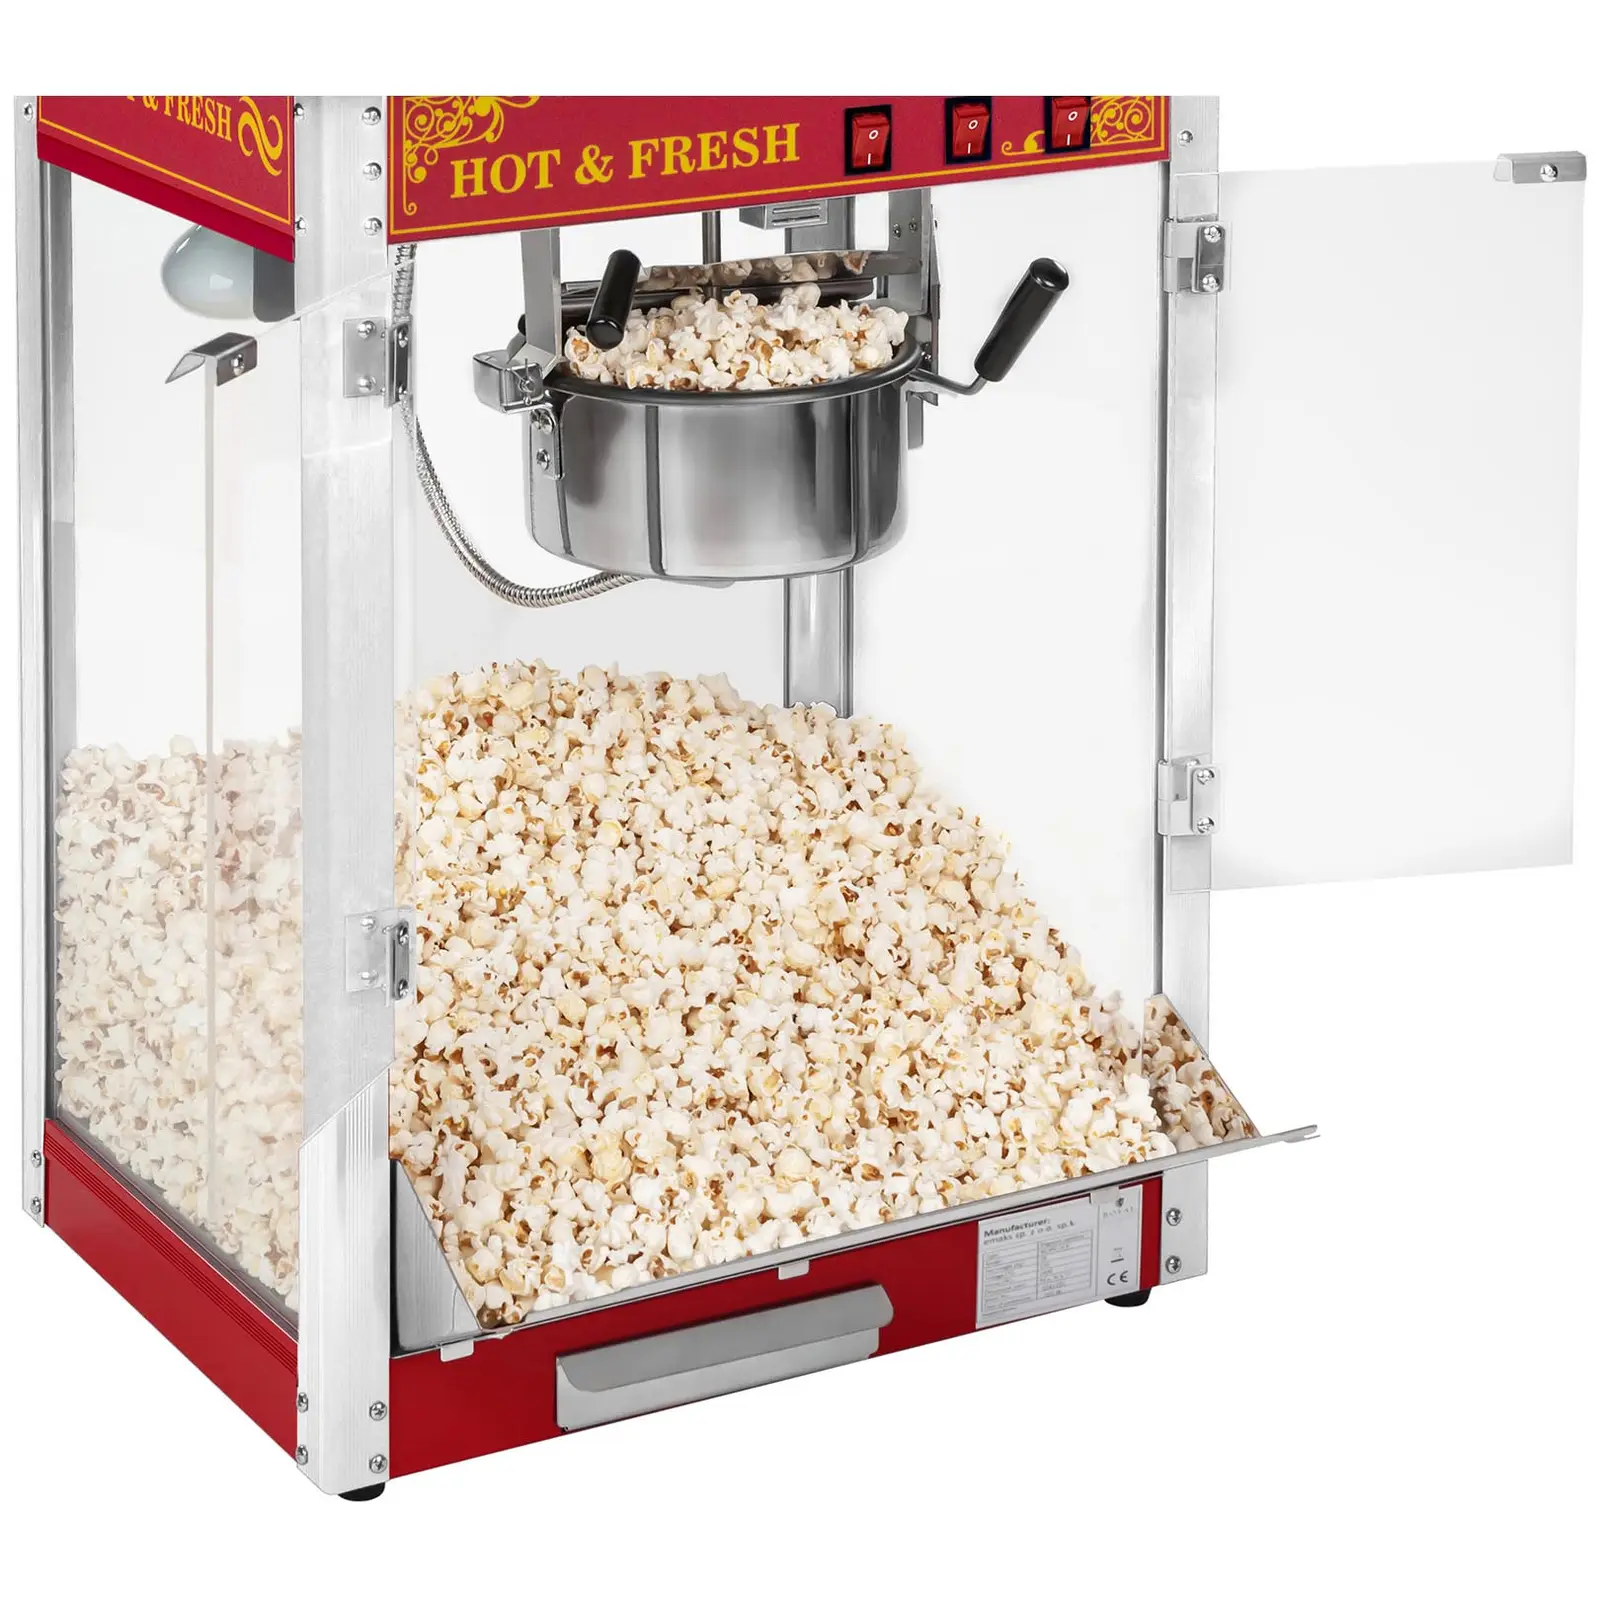 Popcornmaskin med vogn - Retro design - rød